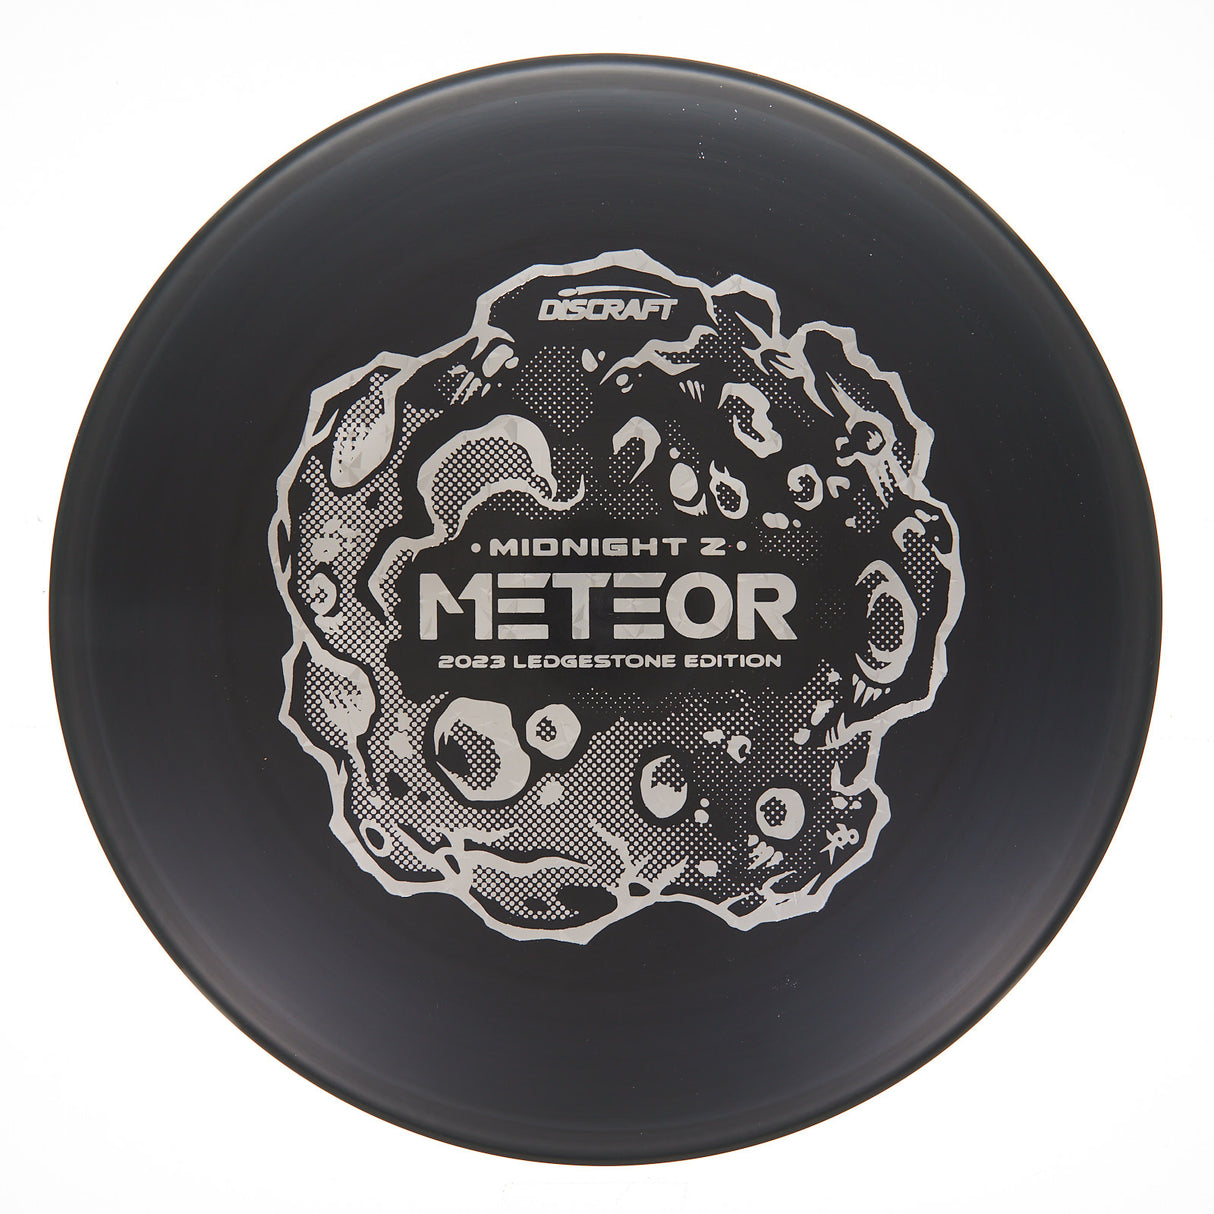 Discraft Meteor - 2023 Ledgestone Edition Midnight Z 179g | Style 0005